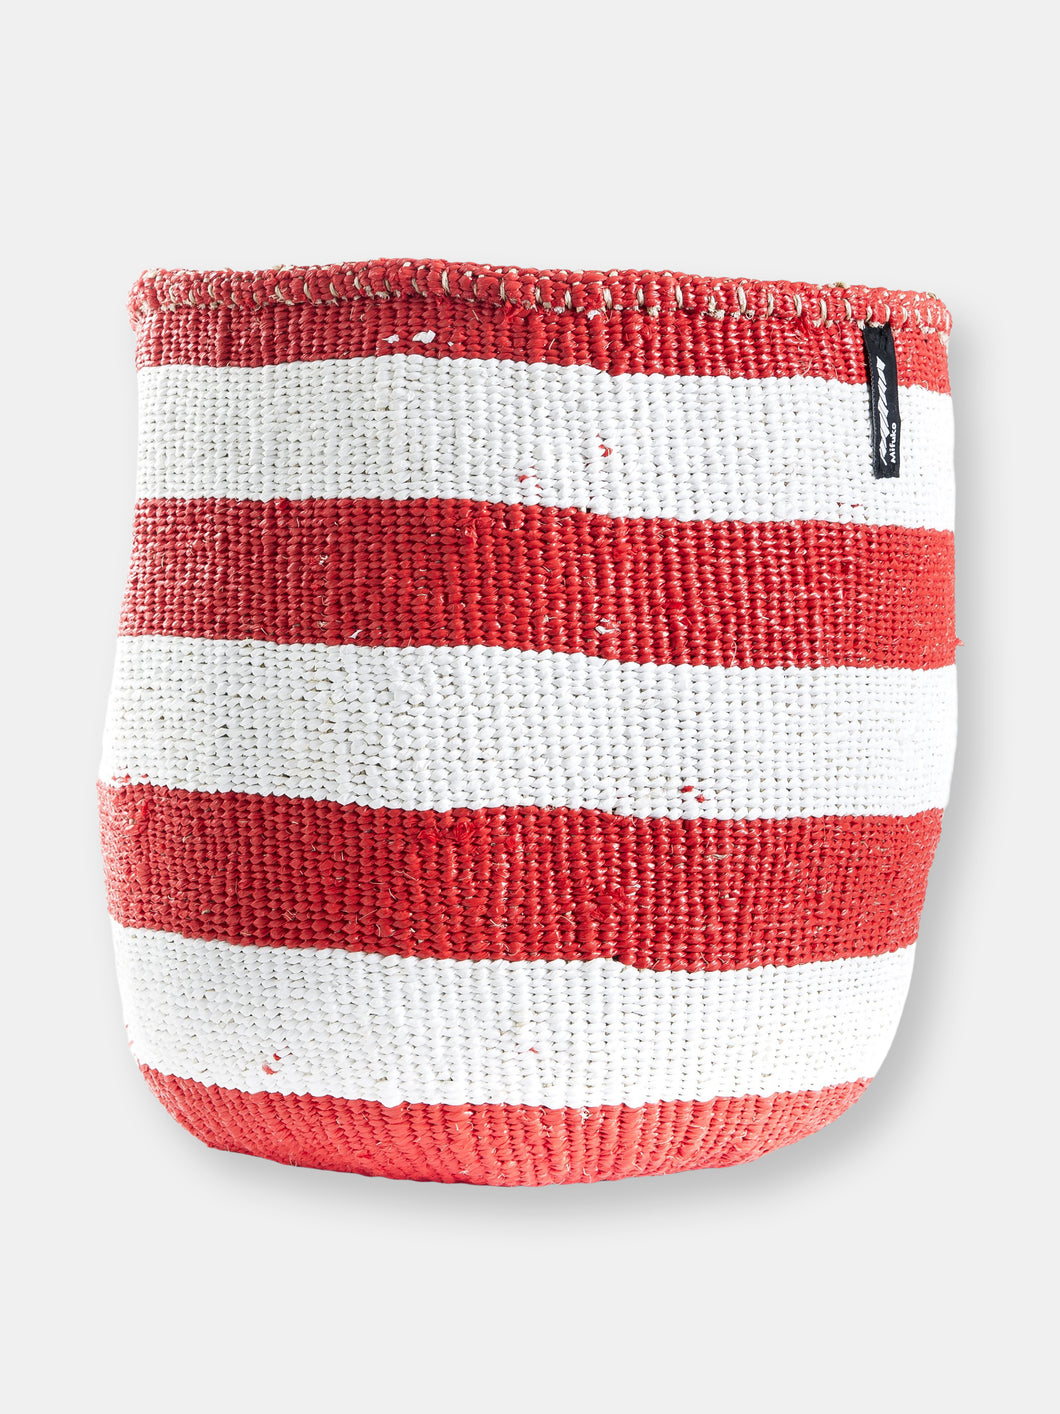 Mifuko - Medium Basket with White and Red Stripes